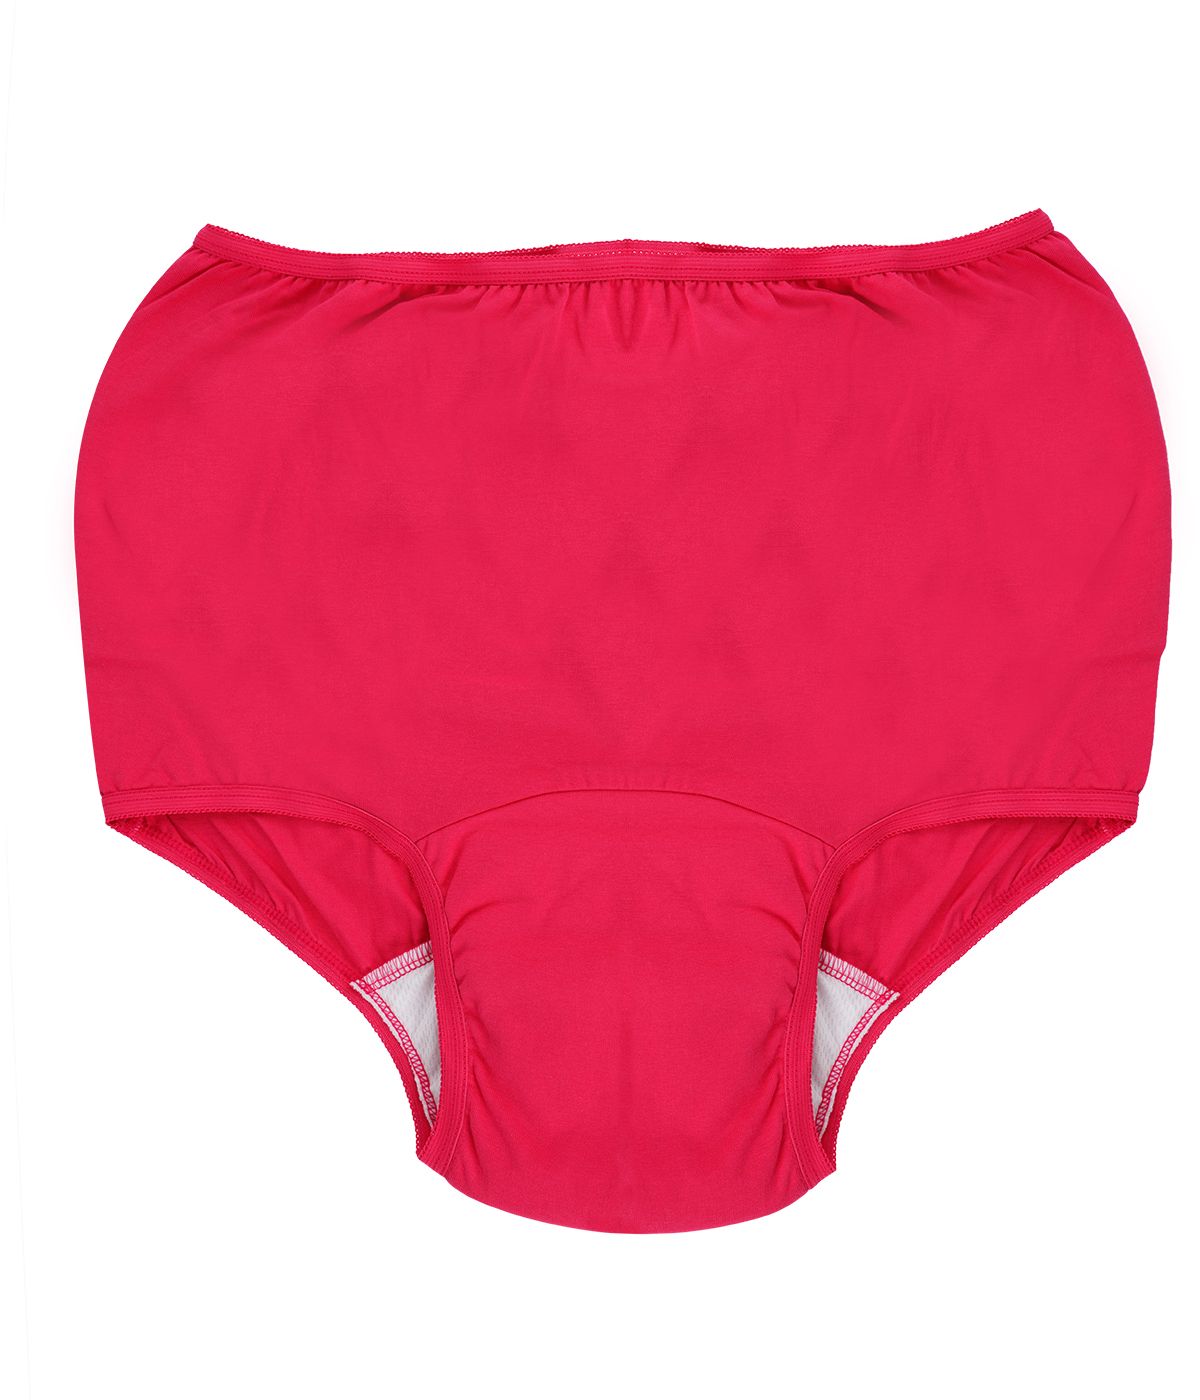 Wemyc Incontinence Underwear For Women I Washable & Reusable I